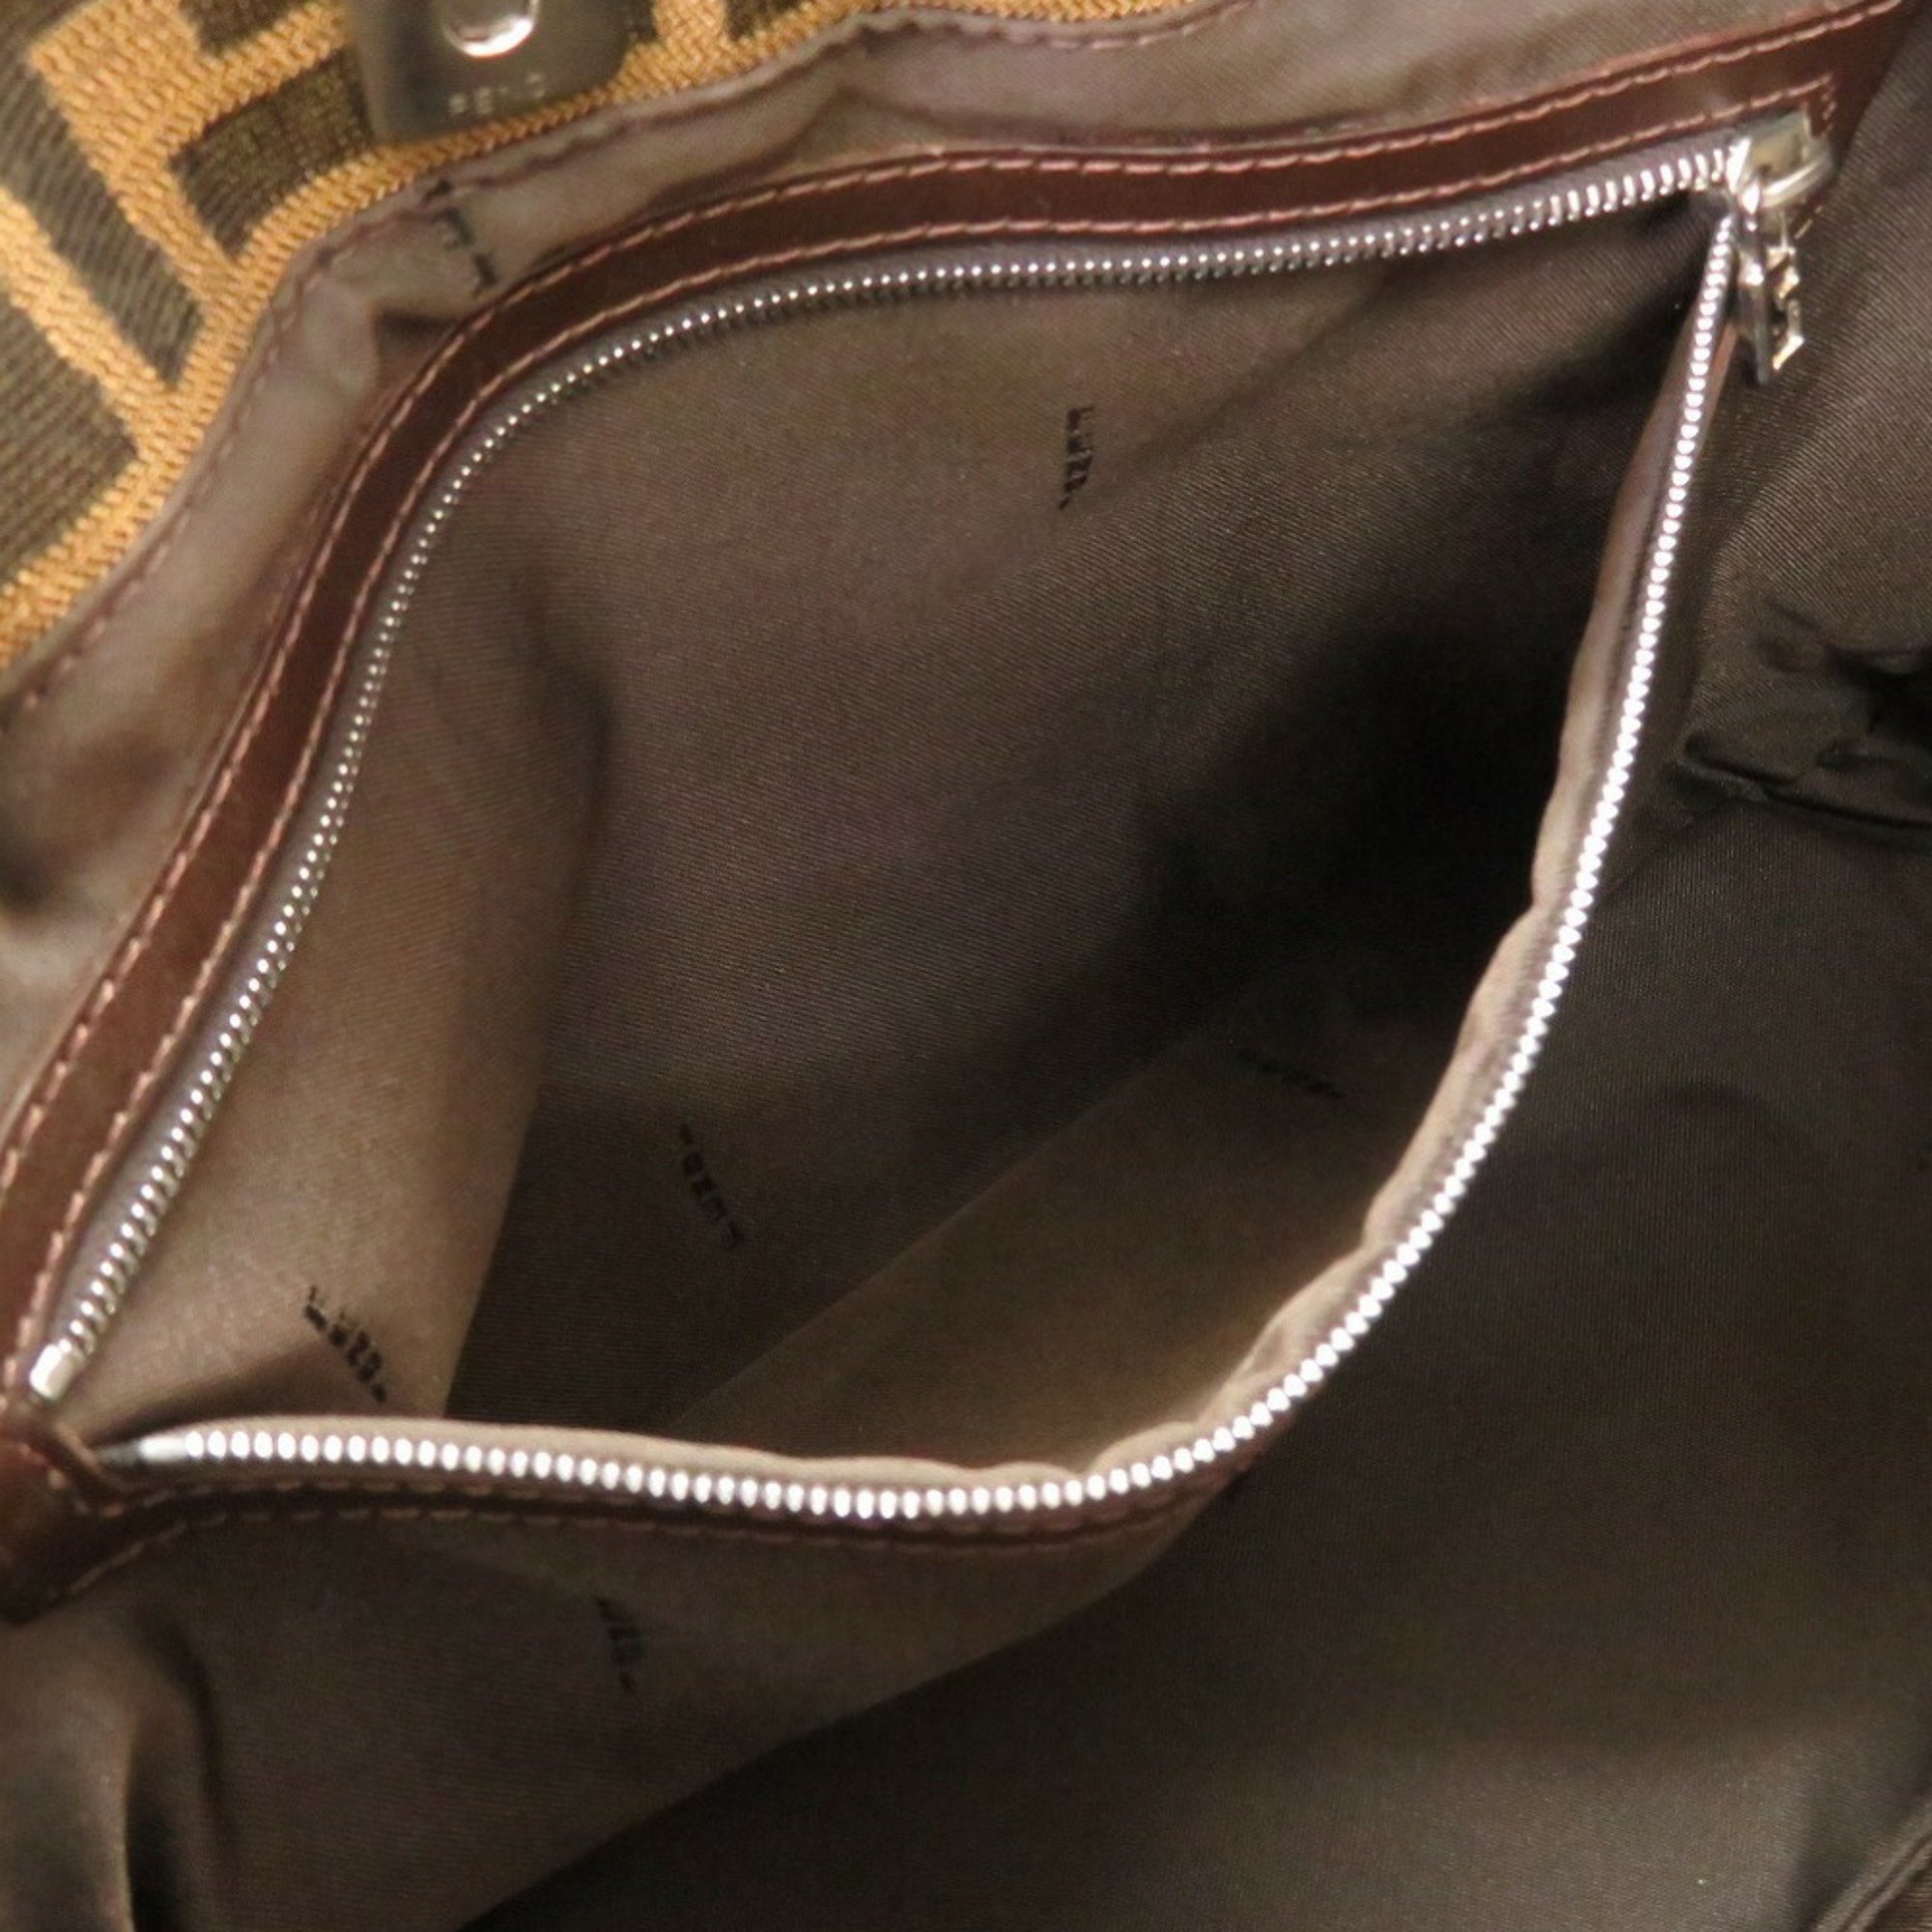 Hermes FF Zucca Pattern Canvas Leather Brown Handbag